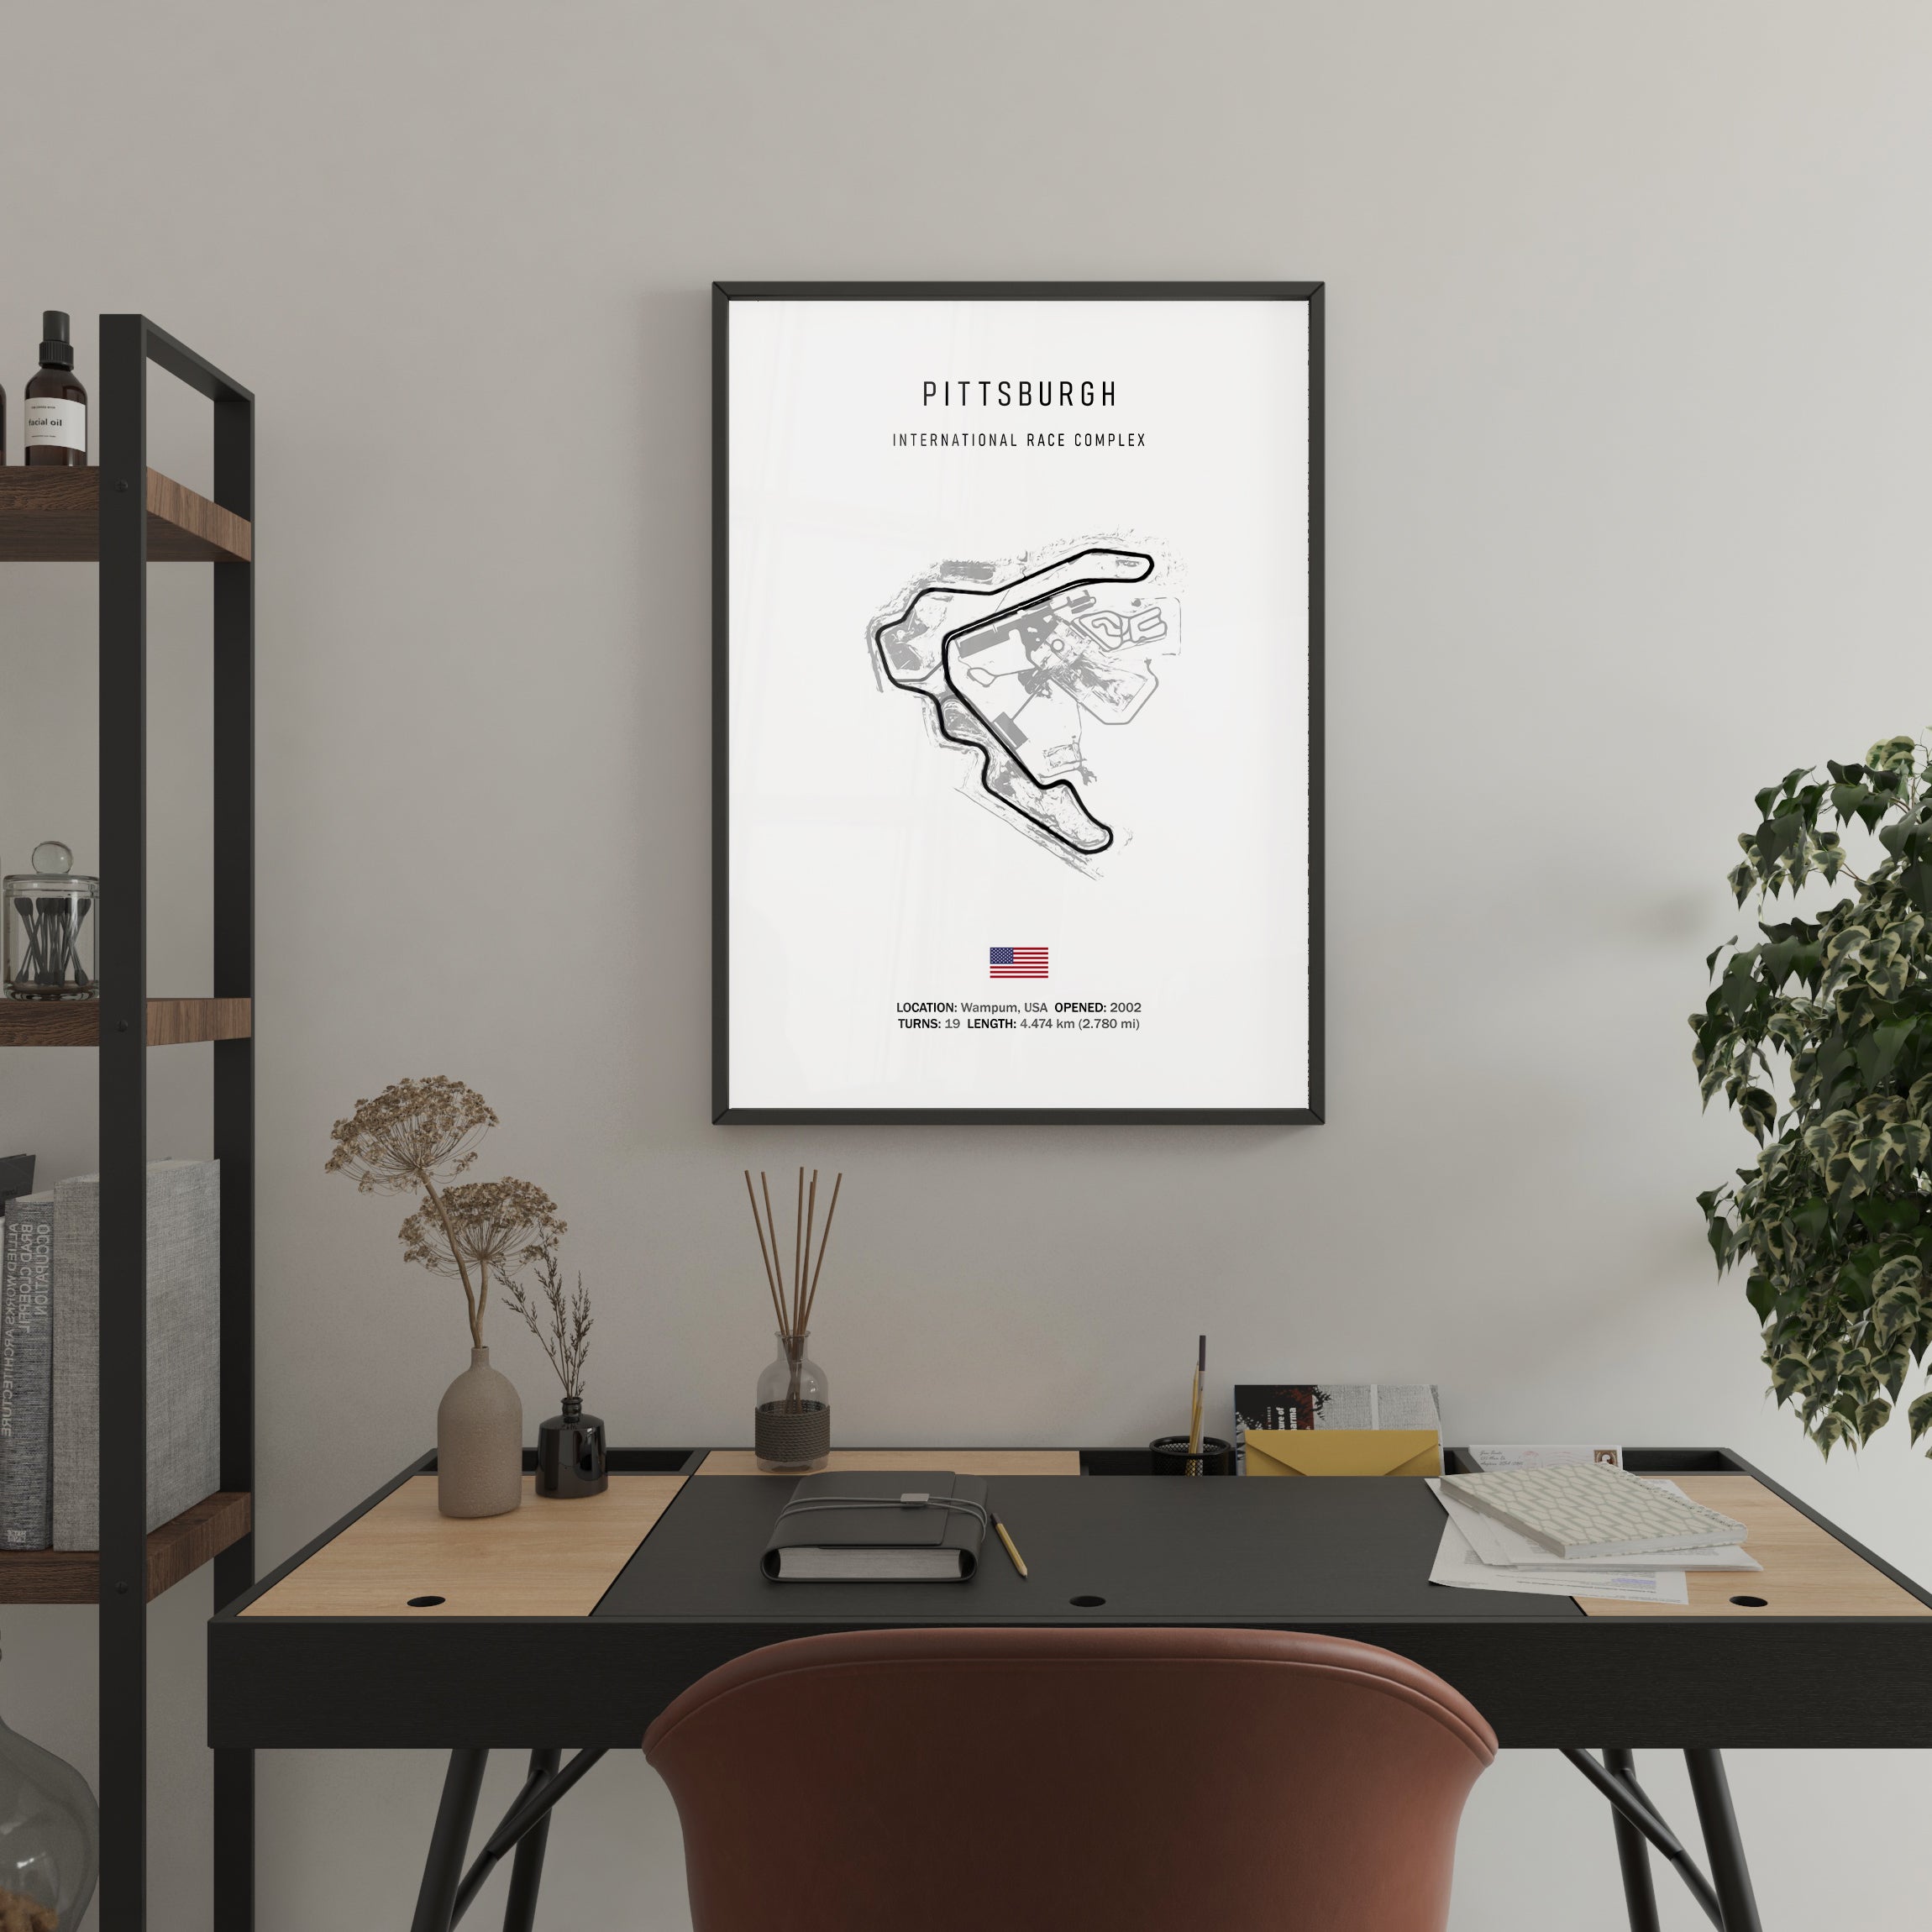 Pittsburgh International Race Complex - Racetrack Print